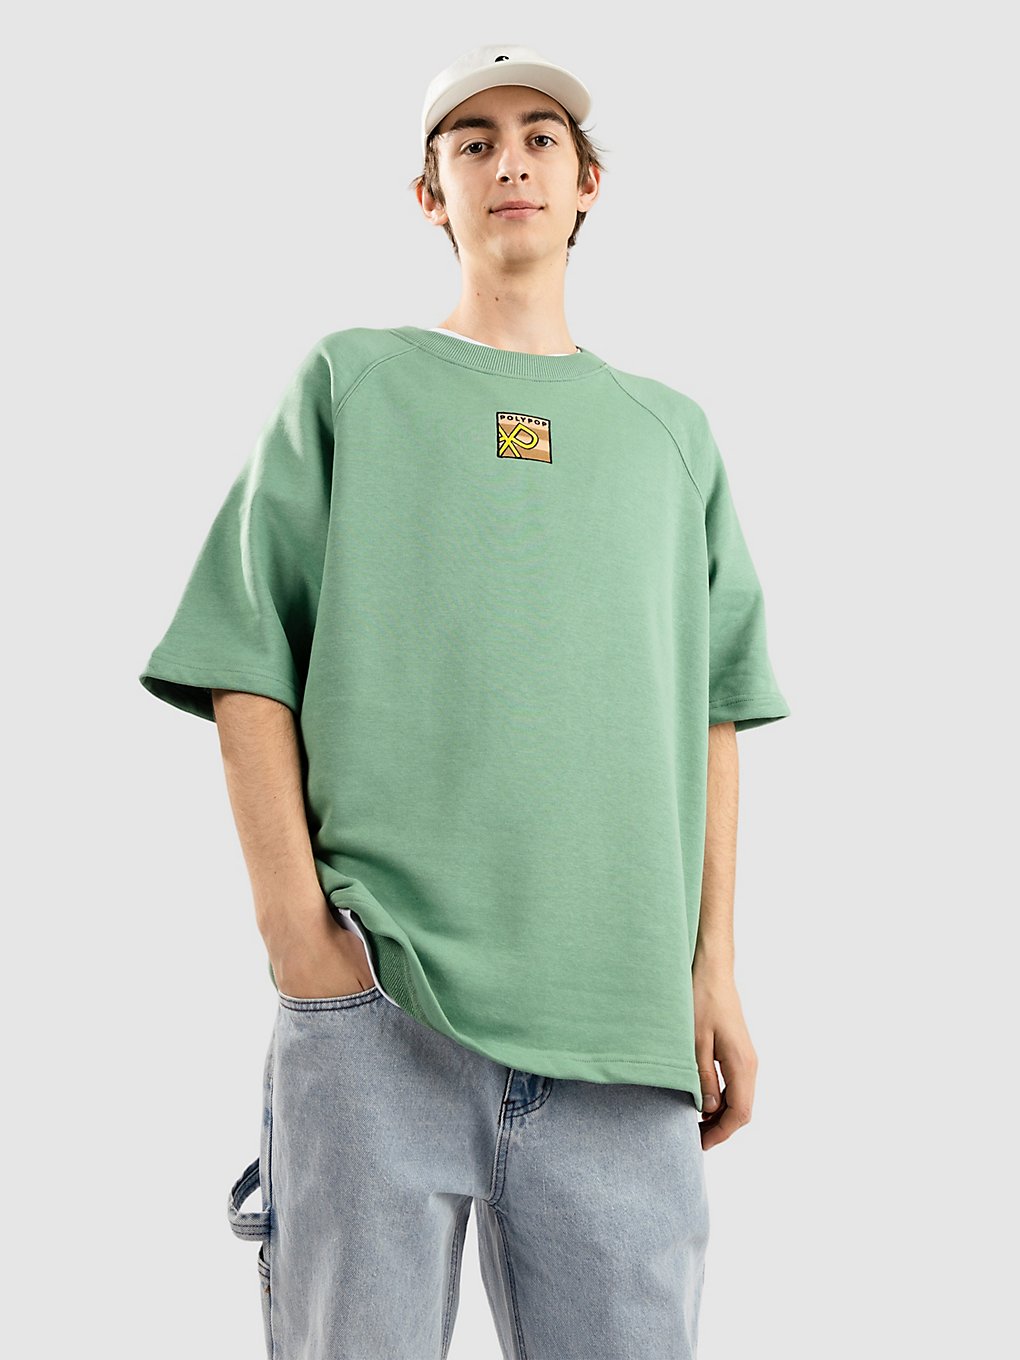 Polypop Square Logo Oversized Fit Heavy T-Shirt almond green kaufen